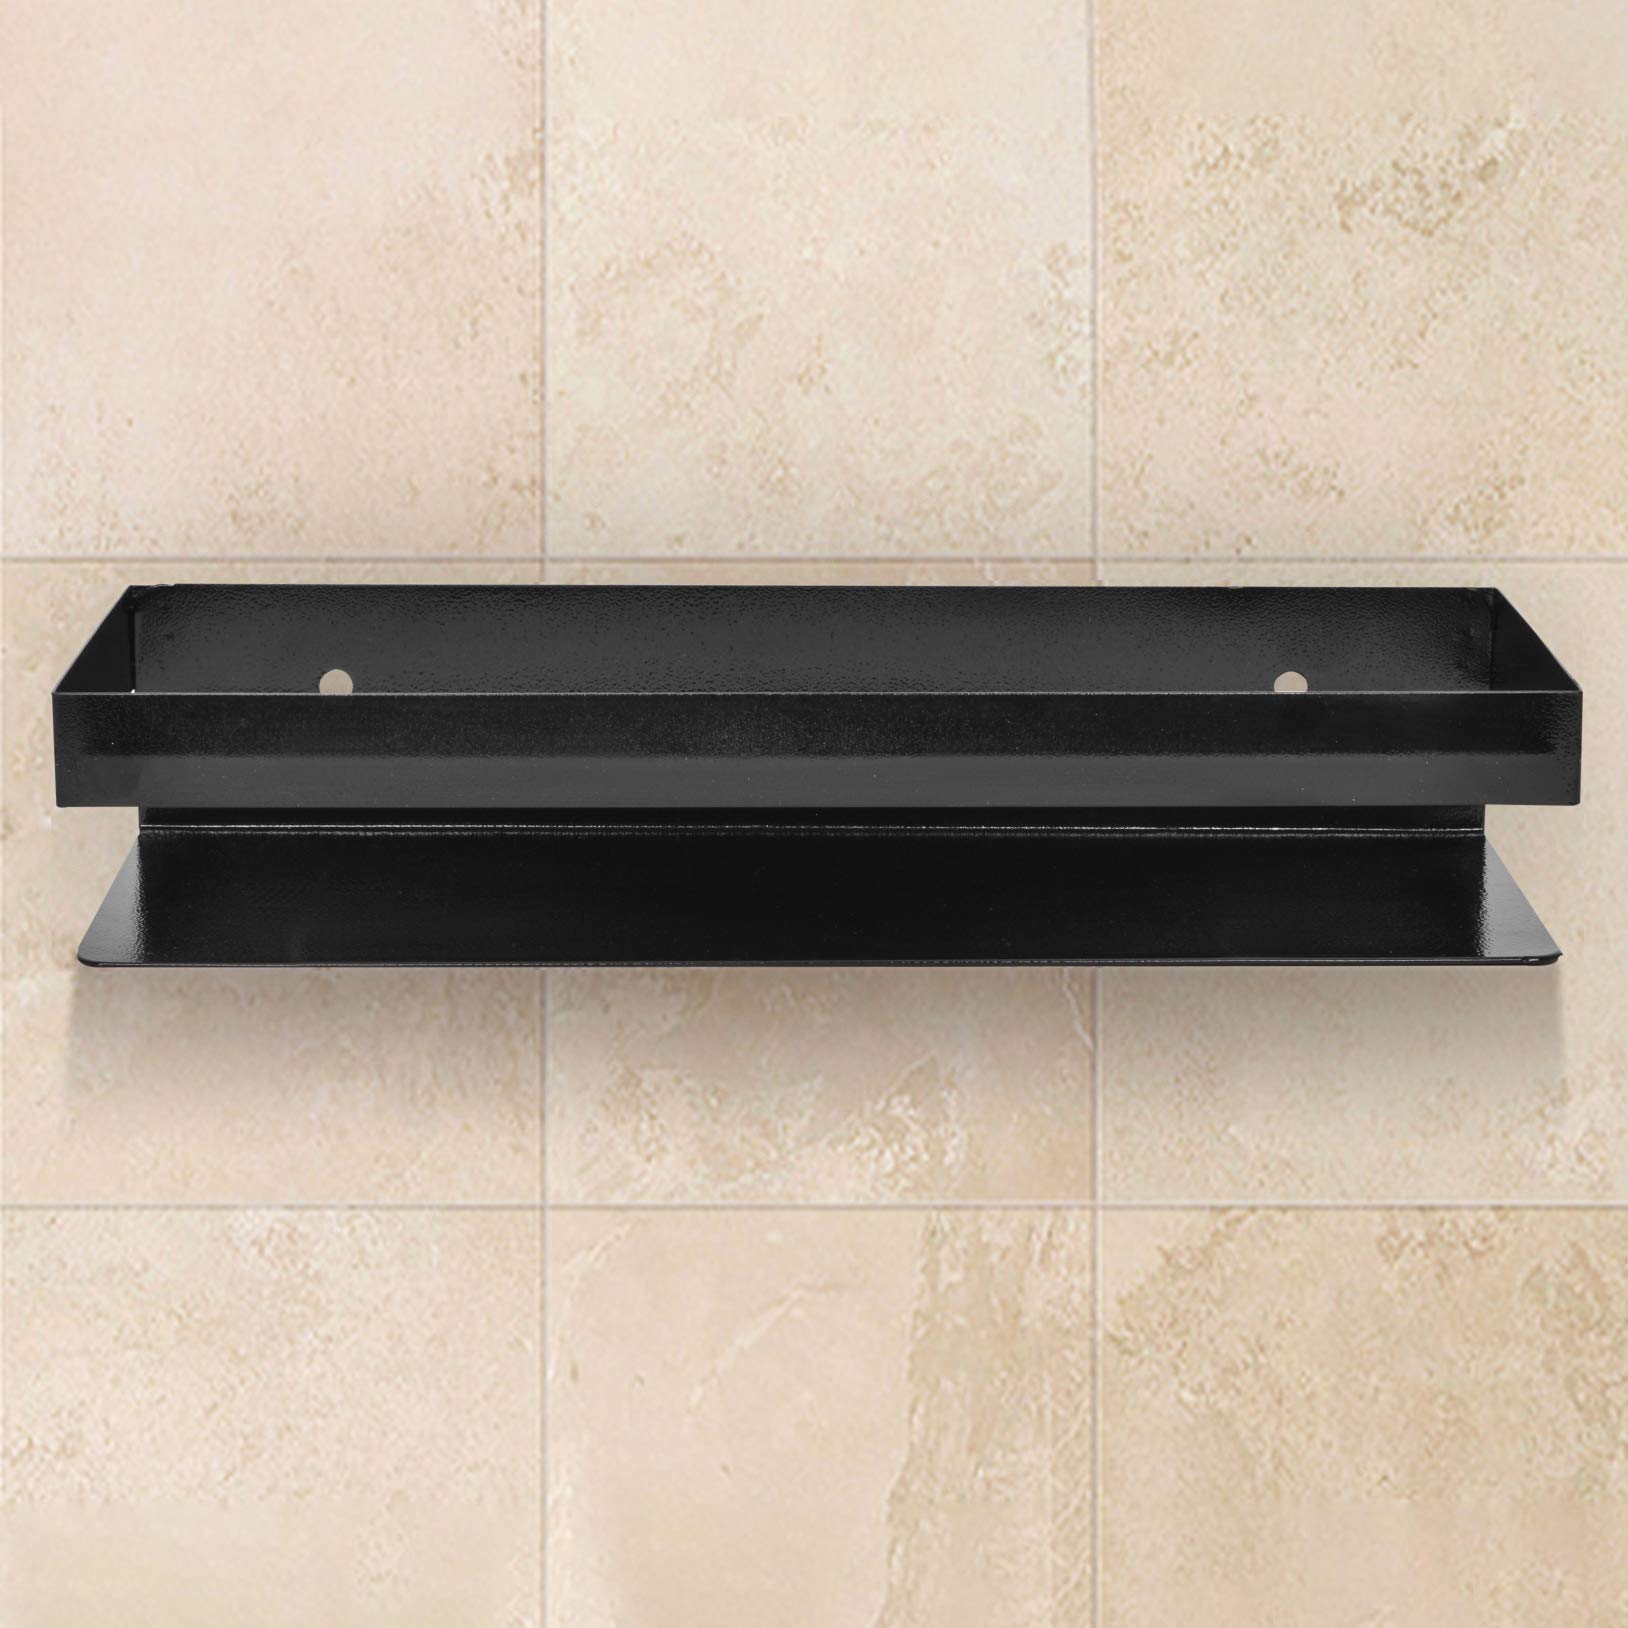 Plantex Metal Multi-Purpose Shelf - Bathroom Shelf - Kitchen Shelf - 14 X 5 inches - Wall Mount - Pack of 3